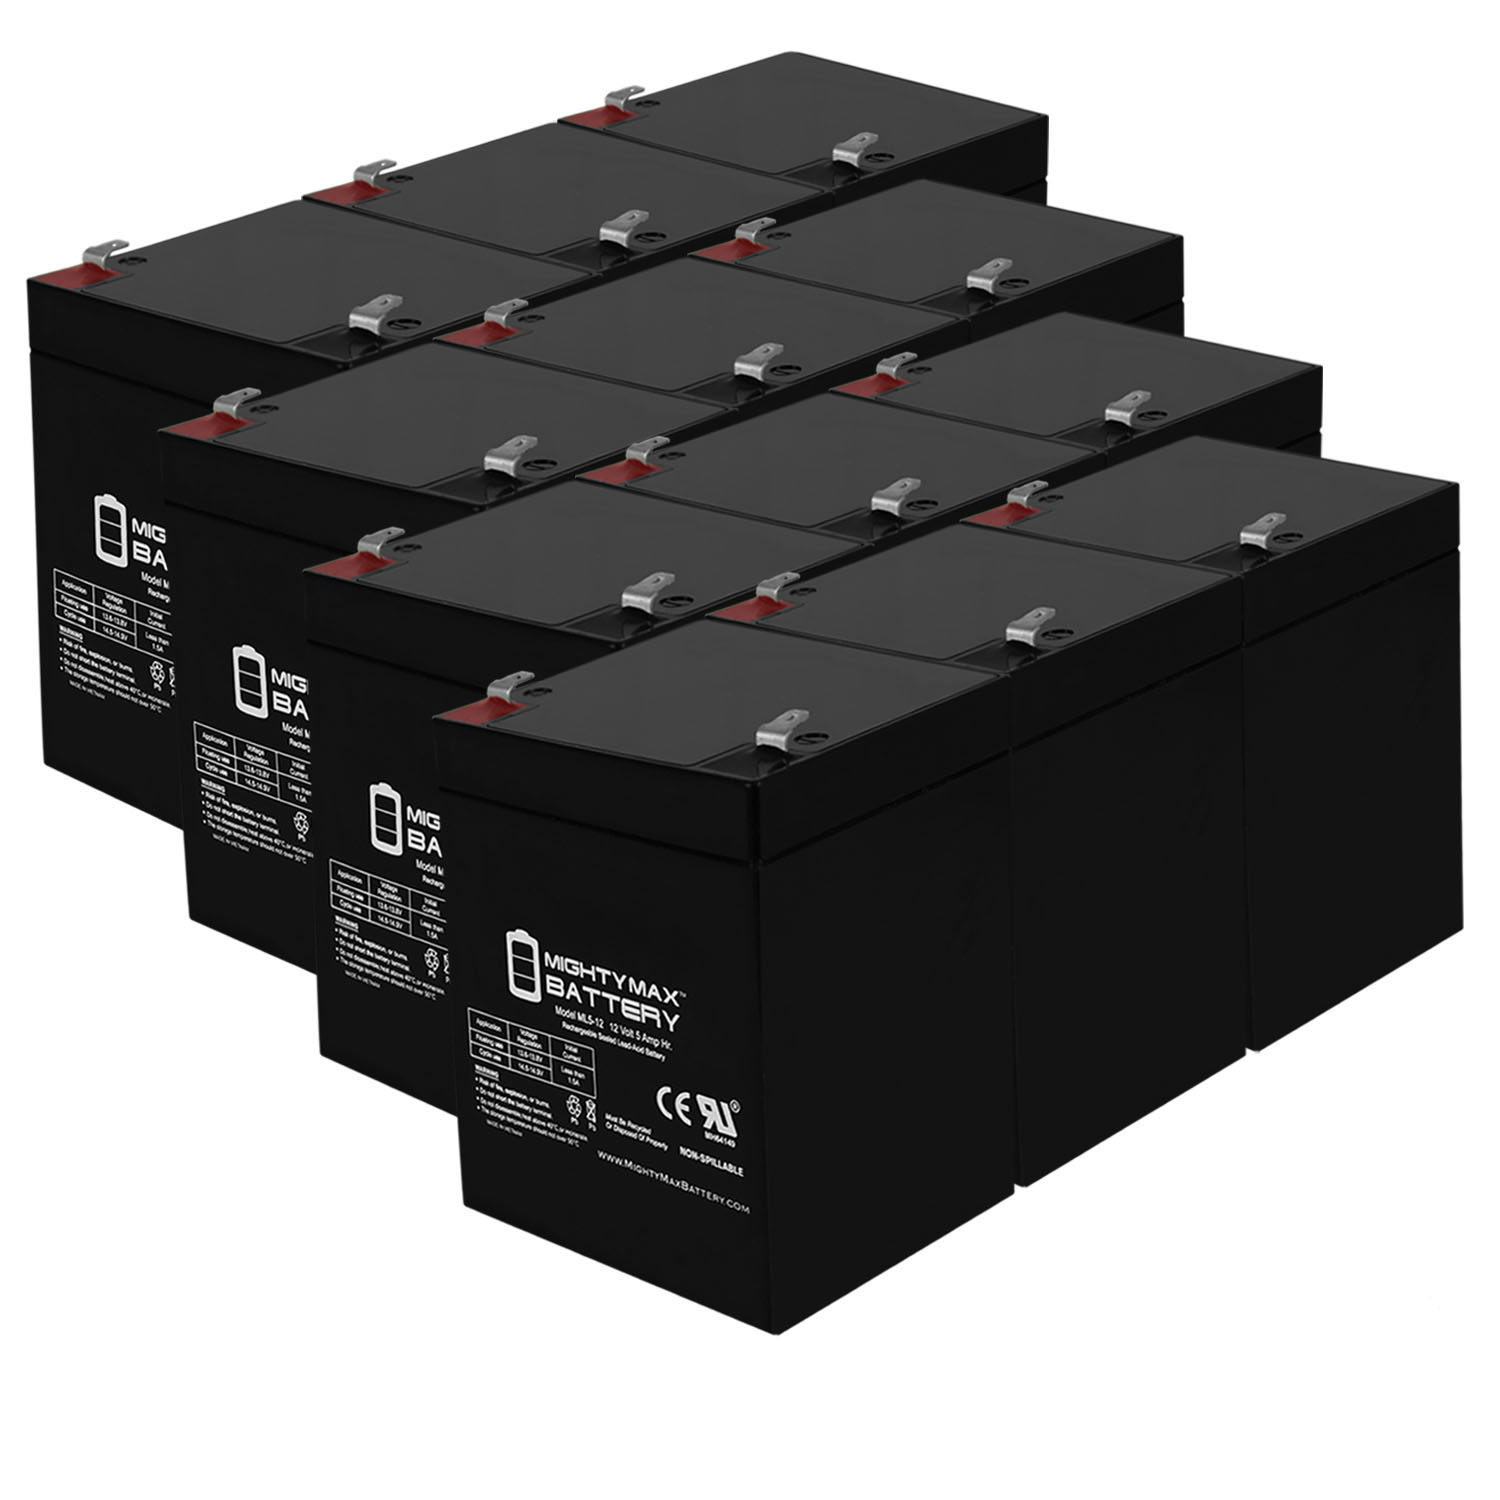 12V 5AH SLA Replacement Battery for Shampaine 4900 - 12 Pack